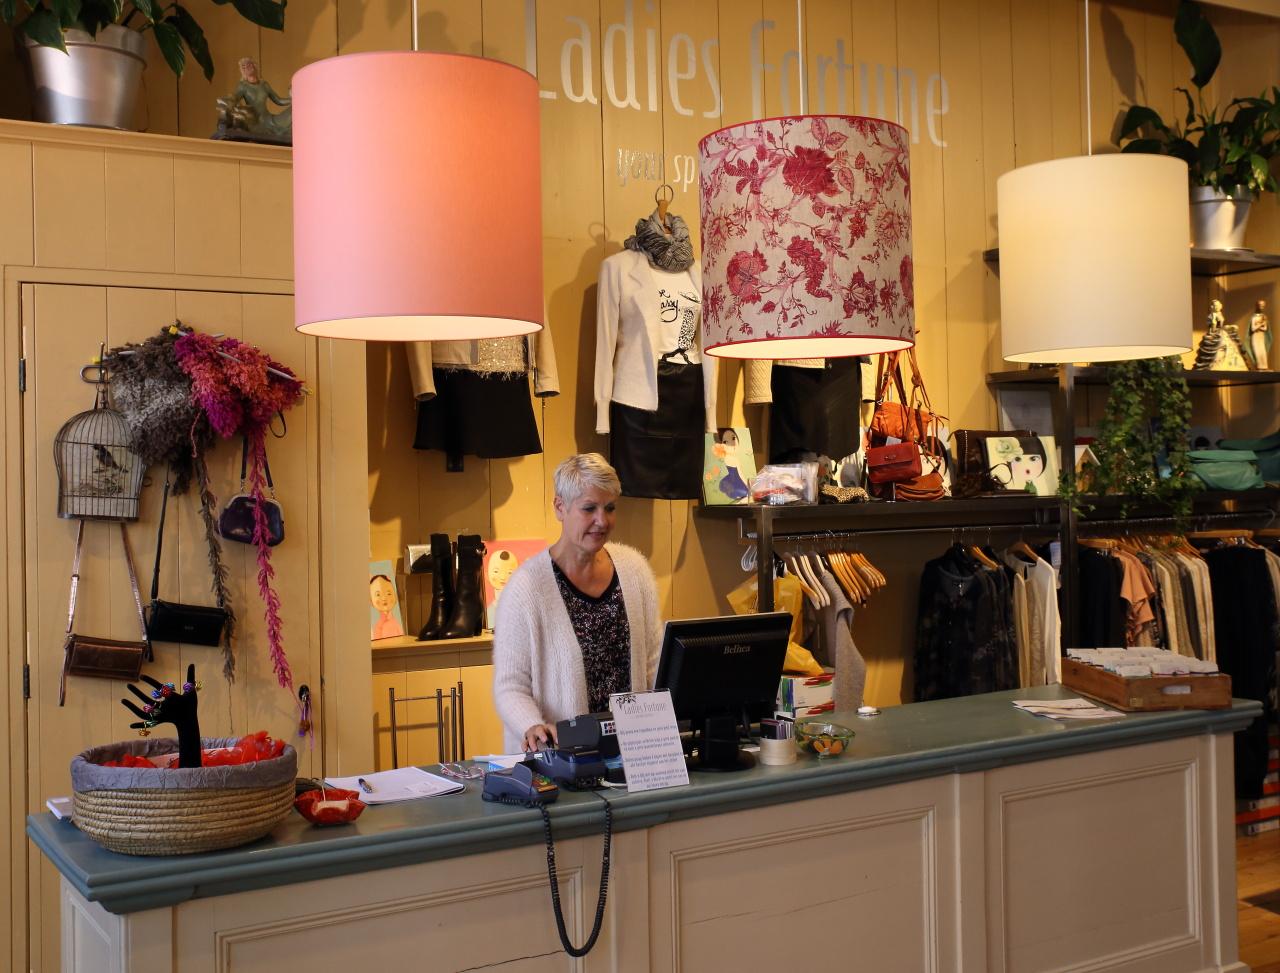 Foto Ladies Fortune in Purmerend, Winkelen, Mode & kleding - #1